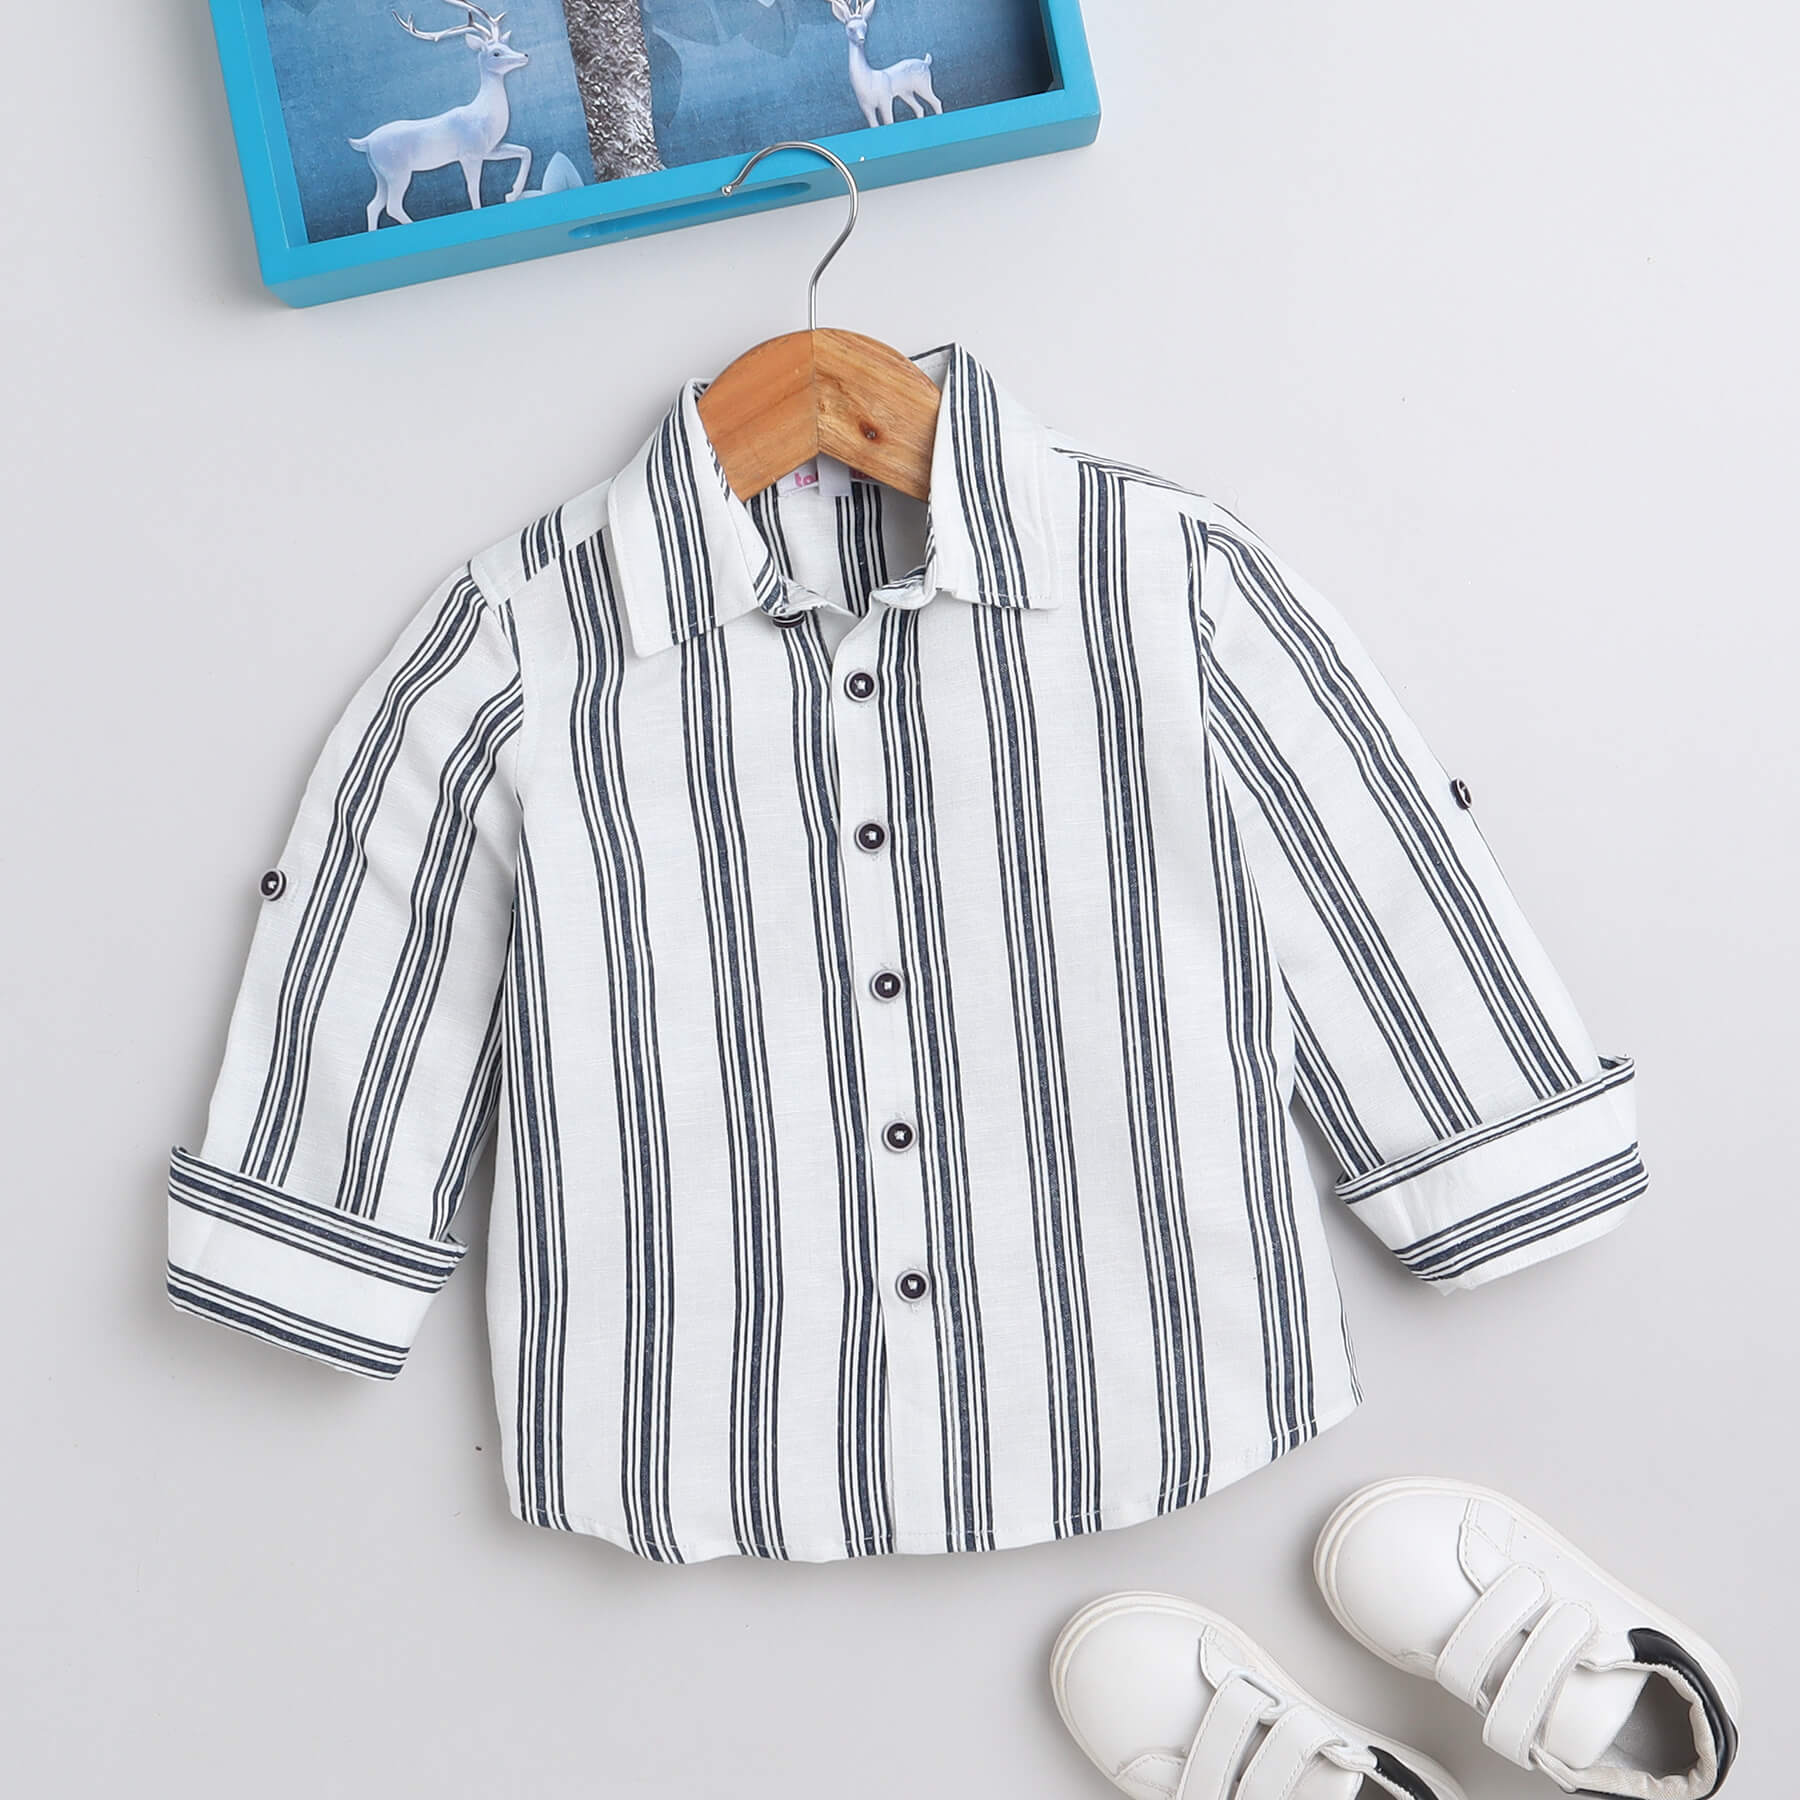 Taffykids stripes printed turn up full sleeves shirt - White/Blue